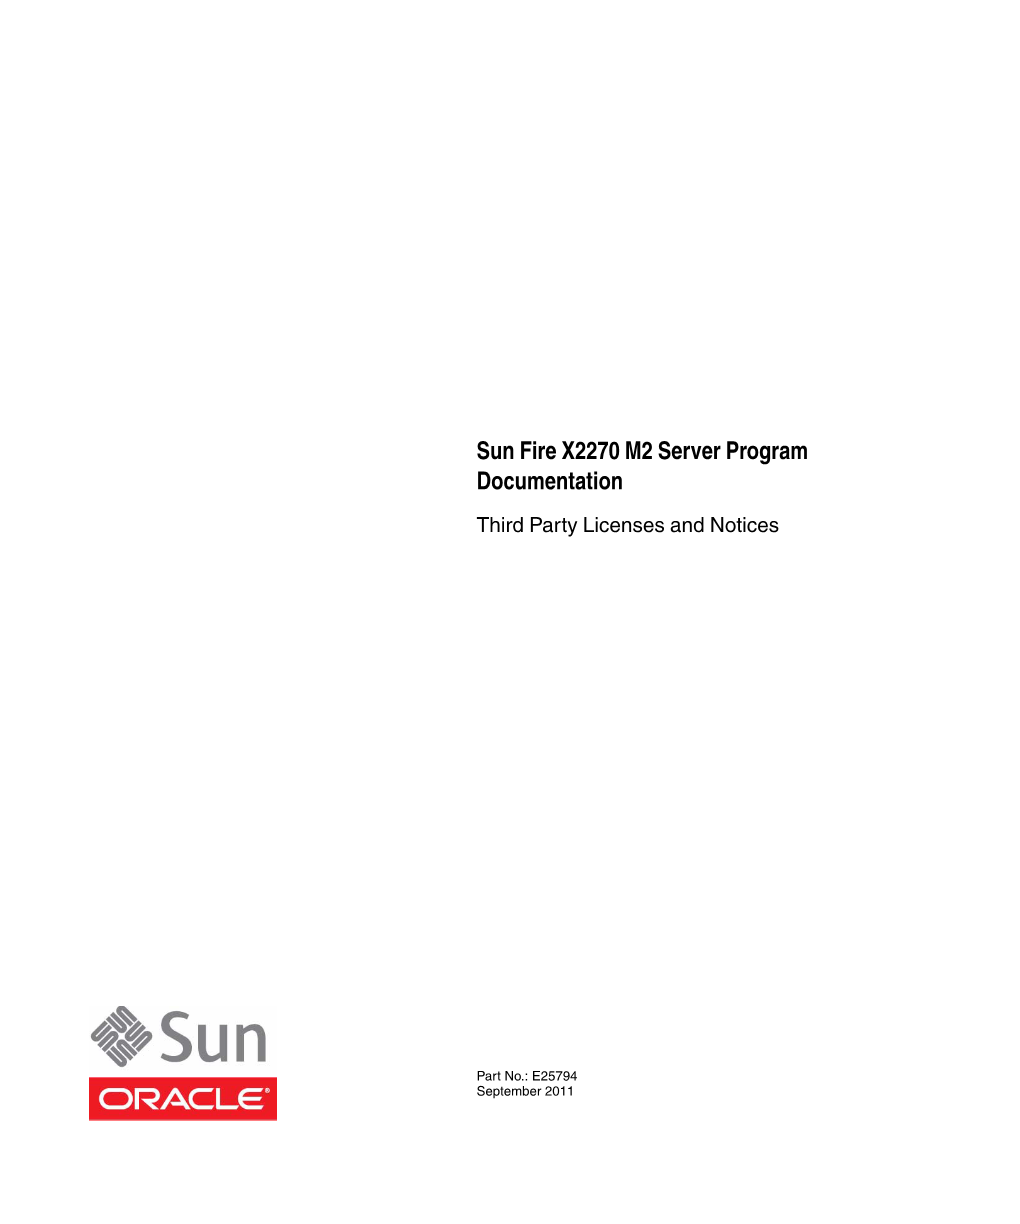 Sun Fire X2270 M2 Server Program Documentation Third Party